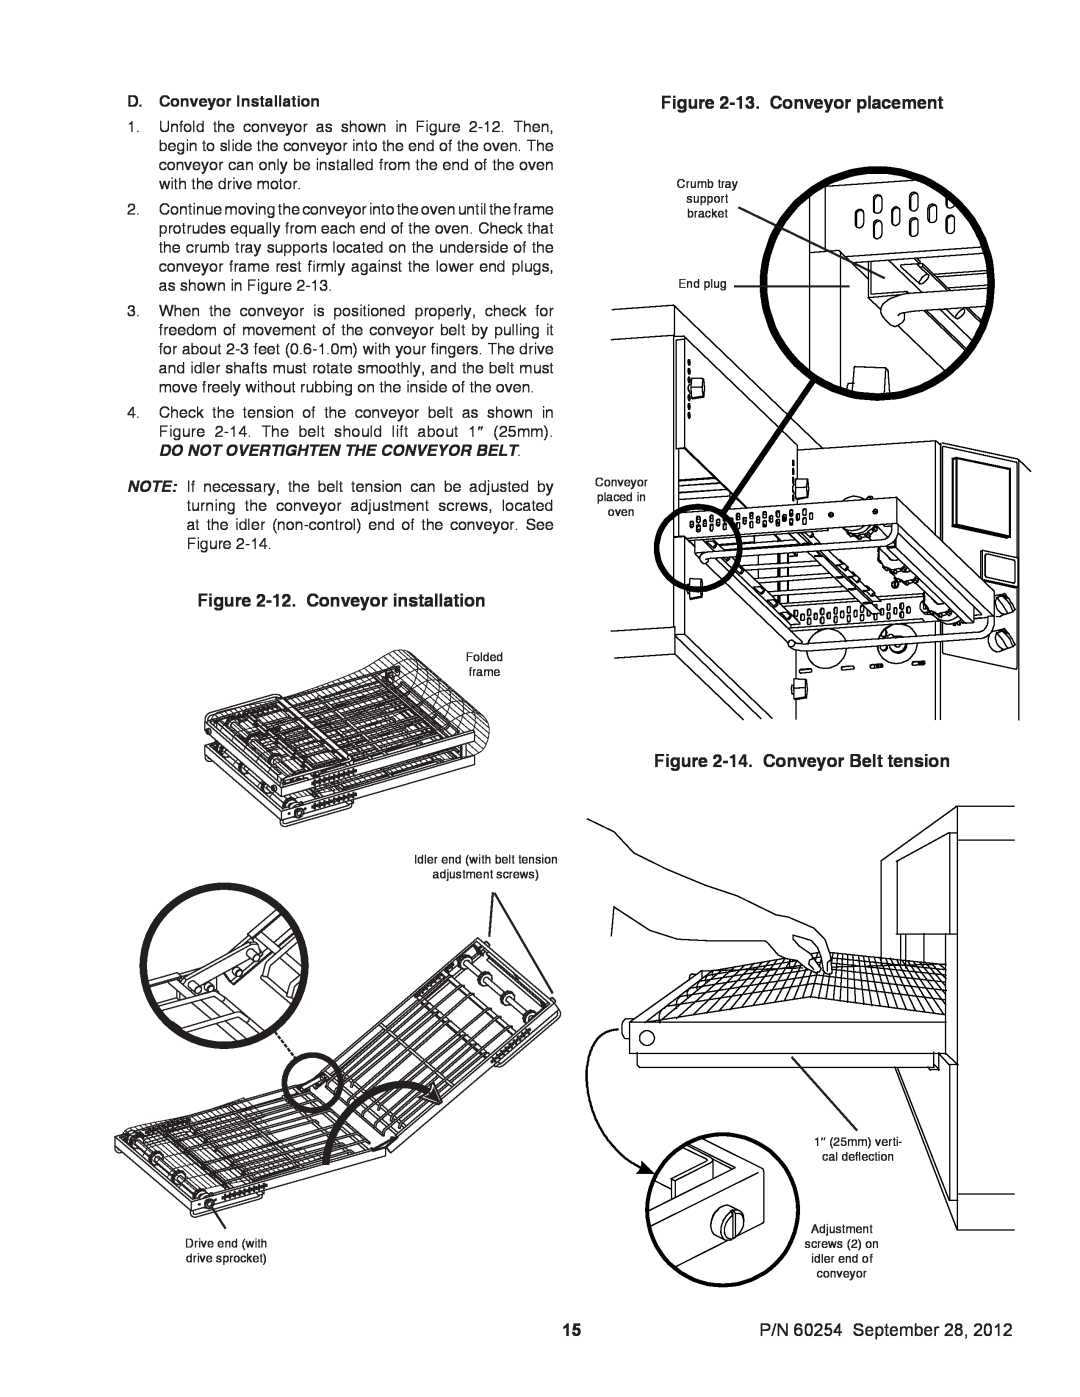 Middleby Marshall 60254 installation manual 12. Conveyor installation, 13. Conveyor placement, 14. Conveyor Belt tension 